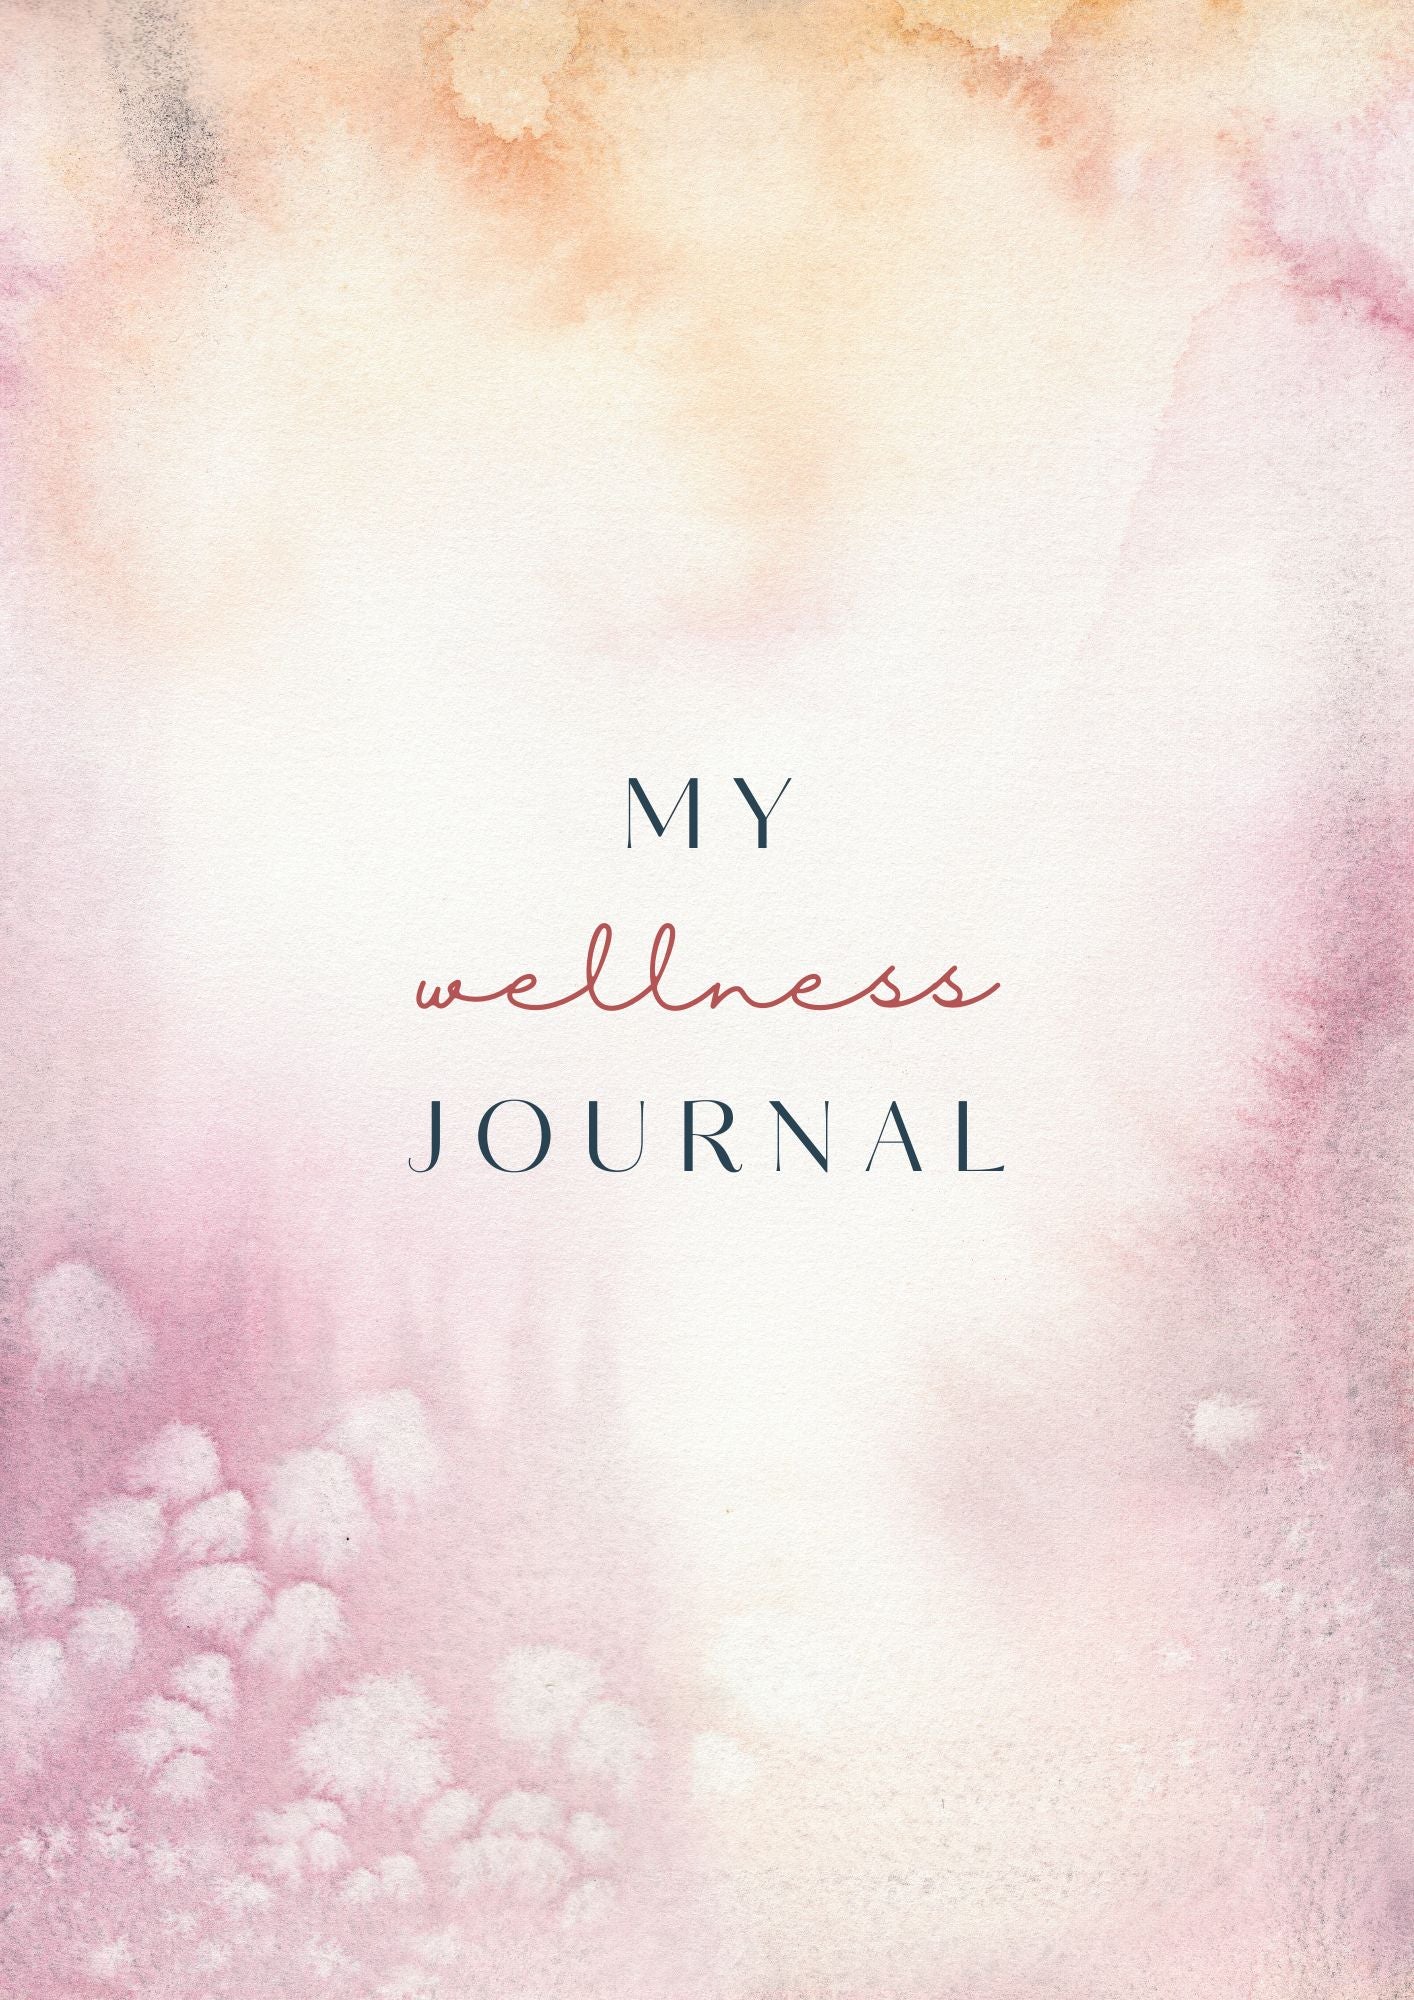 Wellness Journal - FREE